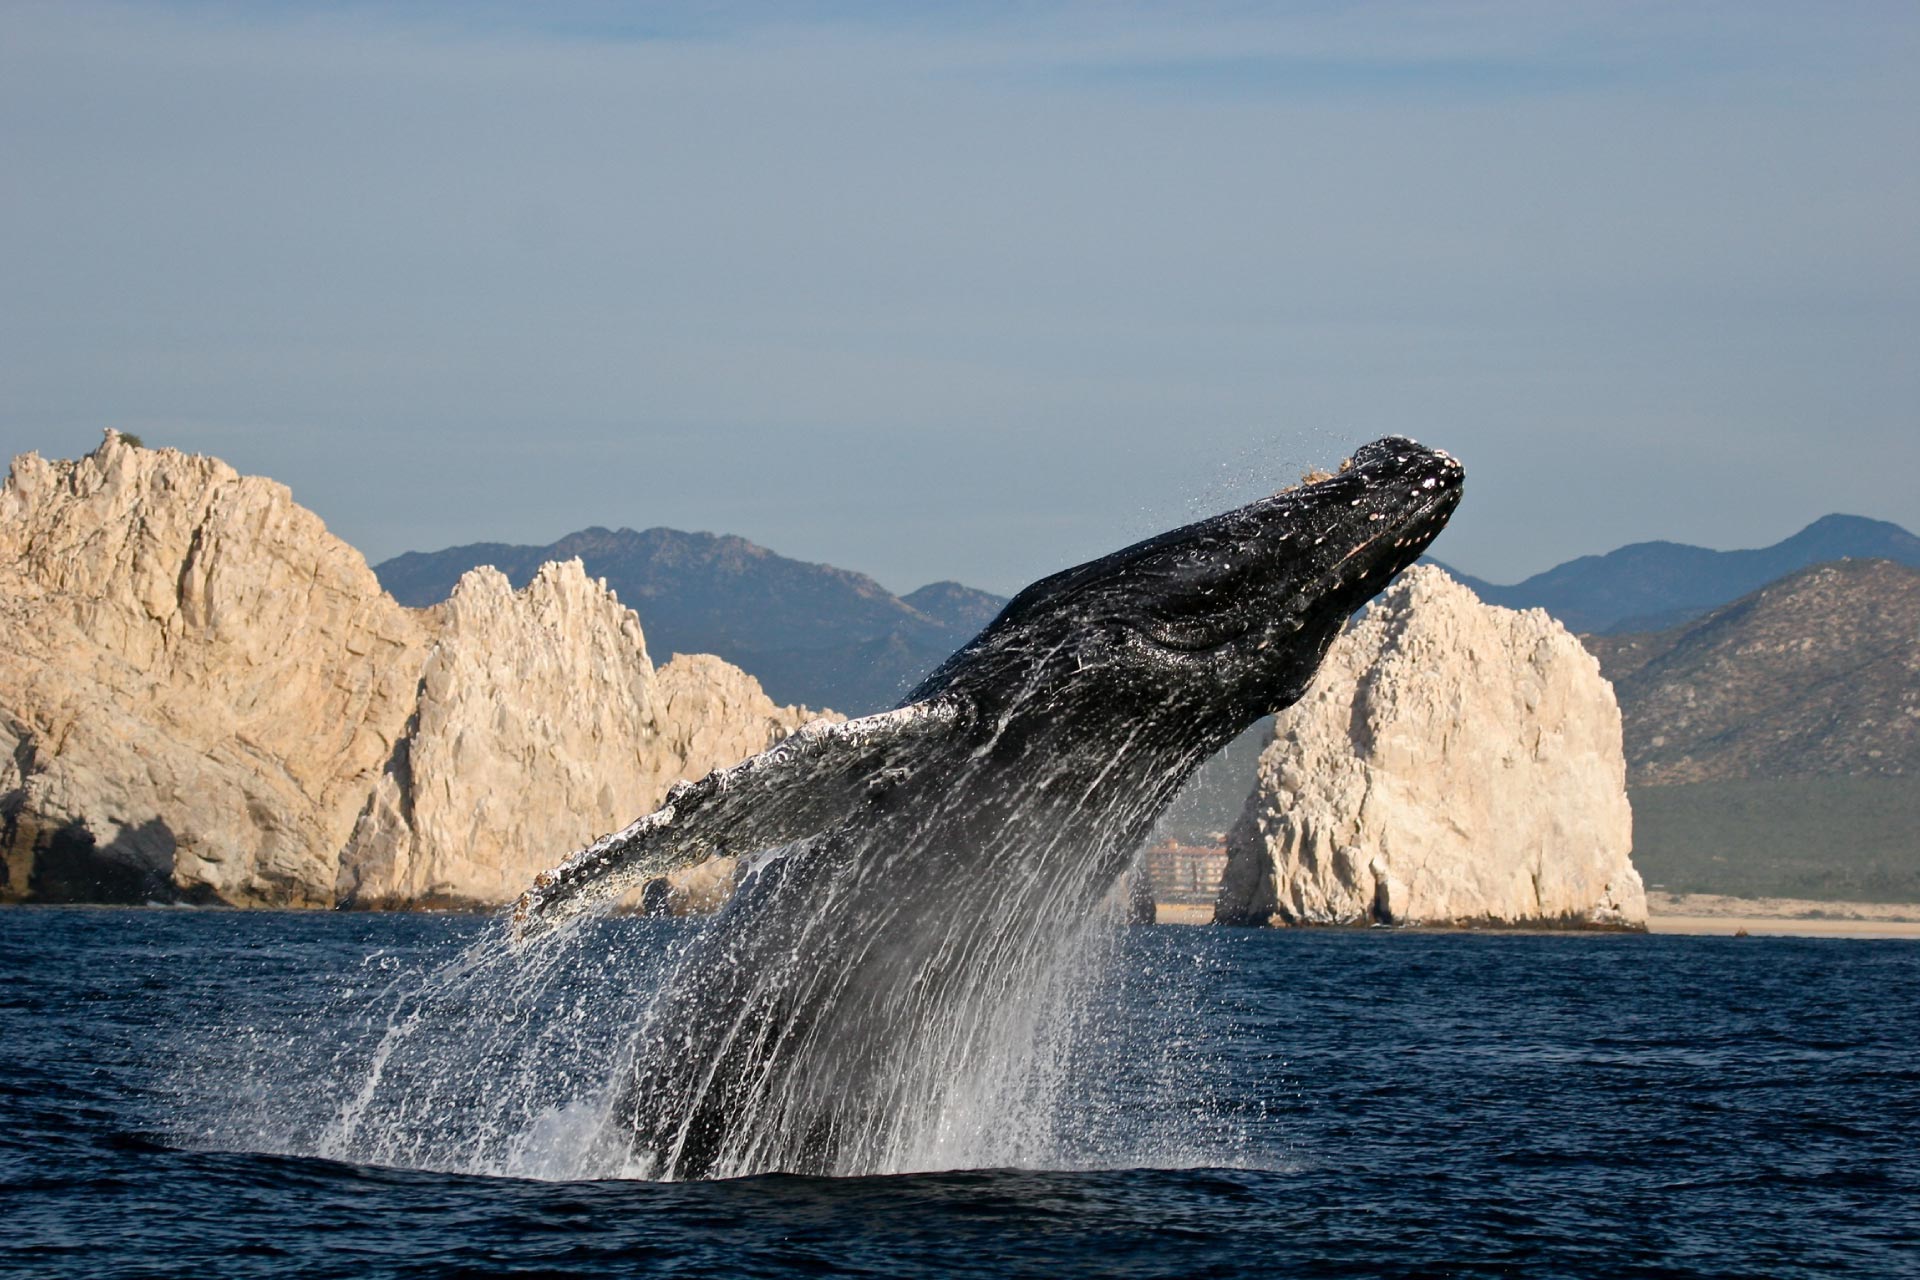 Whale watching Los Cabos Baja California Sur, Mexico